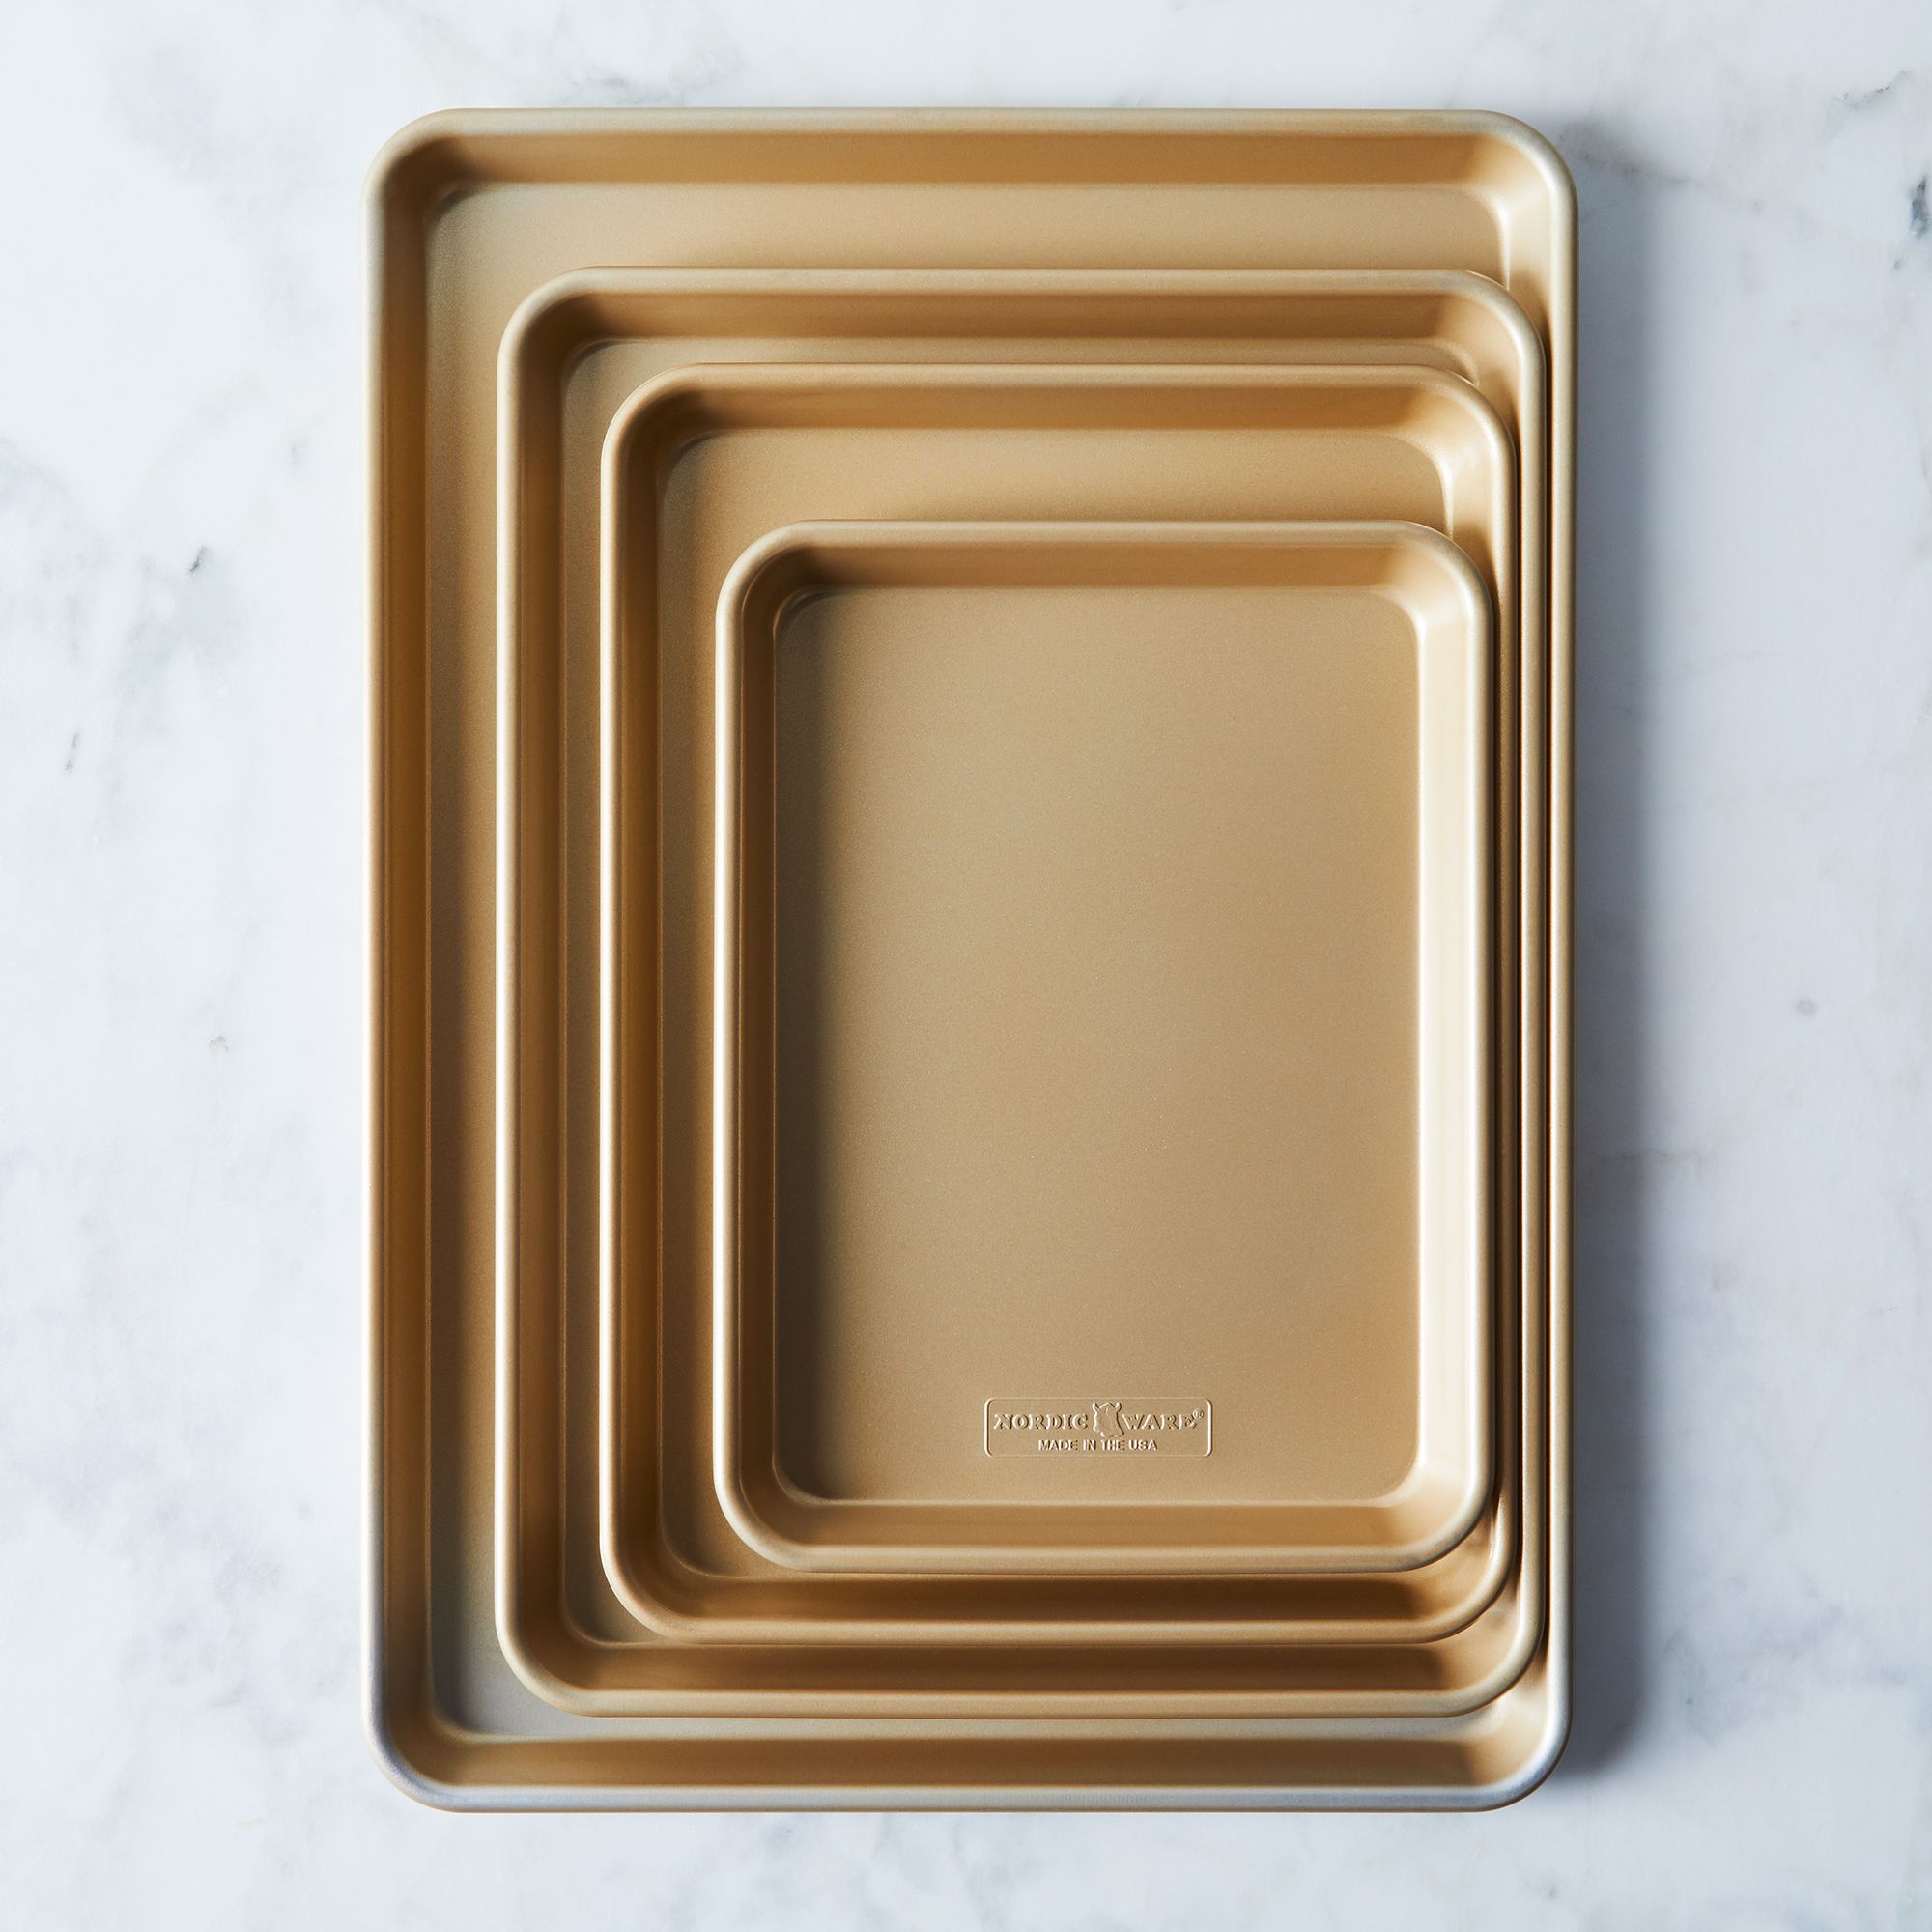 Nordic Ware Gold Nonstick Baking Sheet Sets